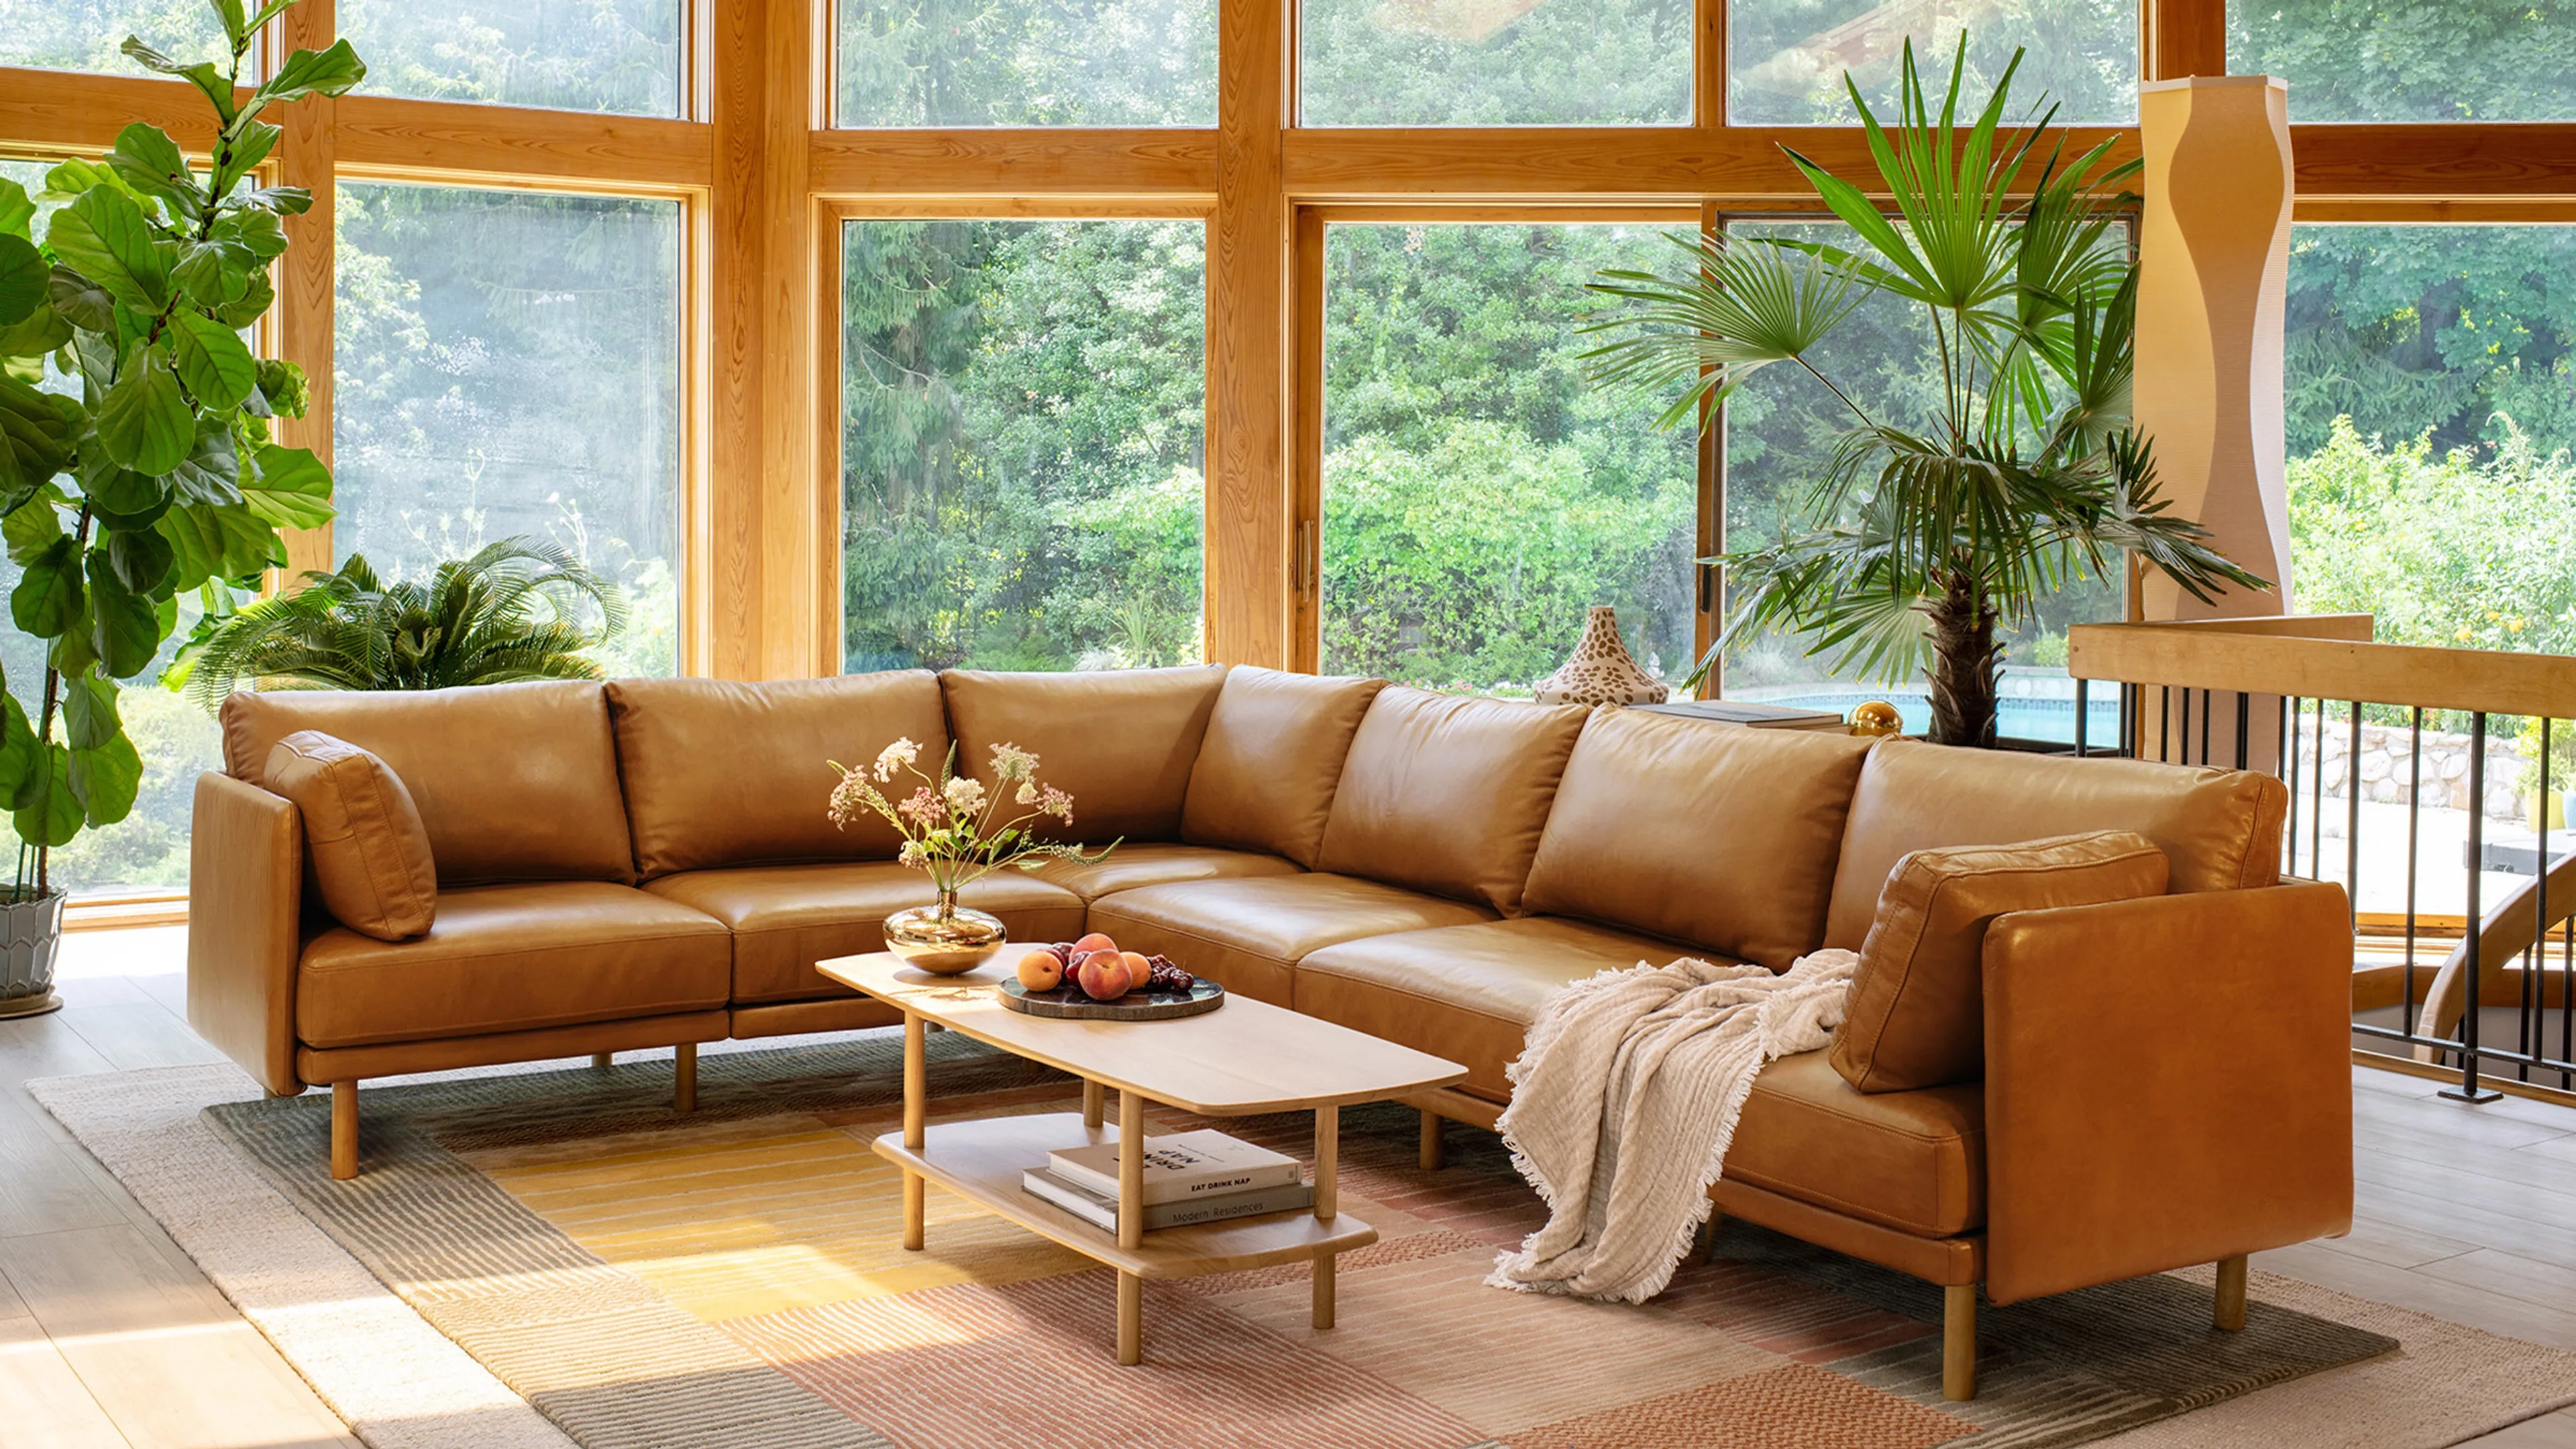 Field Leather 3-Piece Sofa